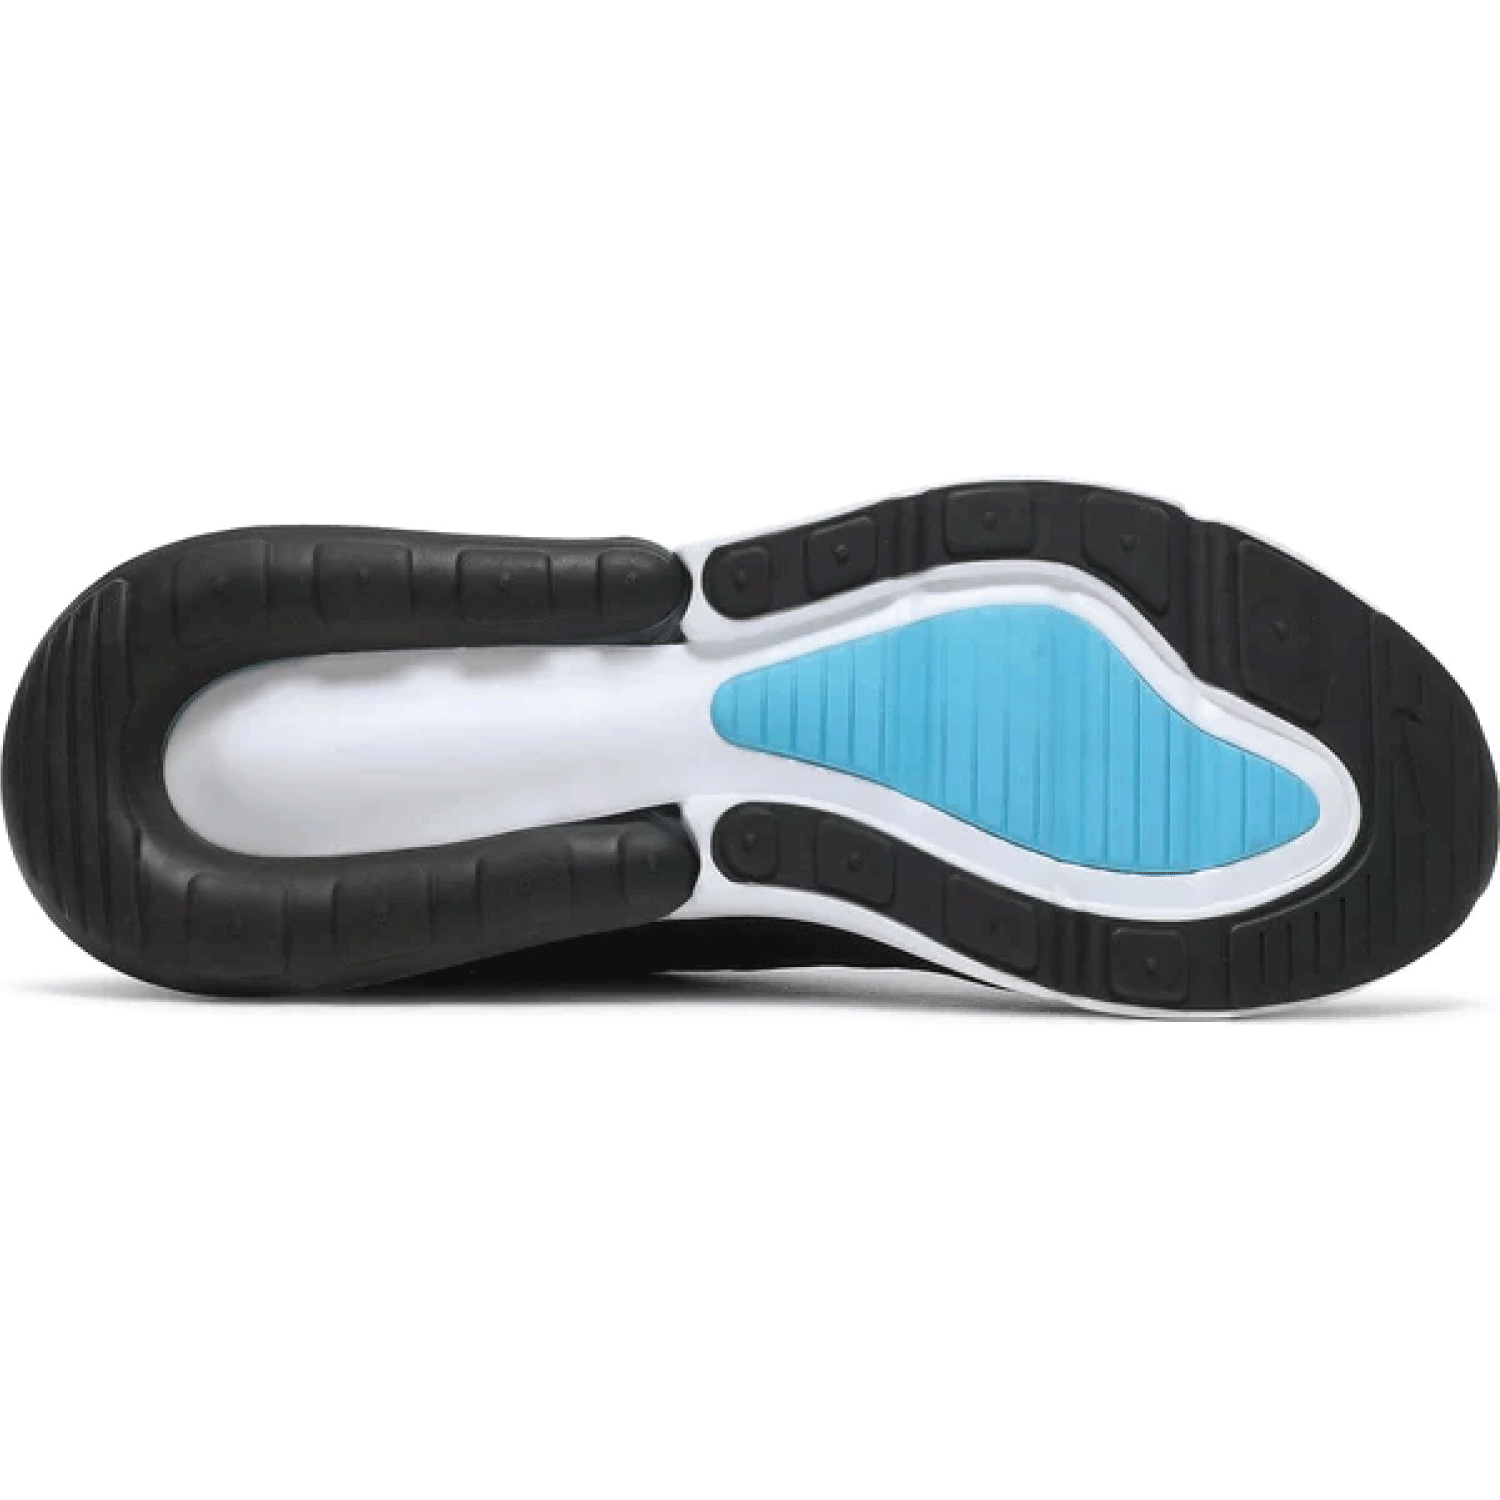 Air Max 270 Black Light Blue Fury Trainers Nike   